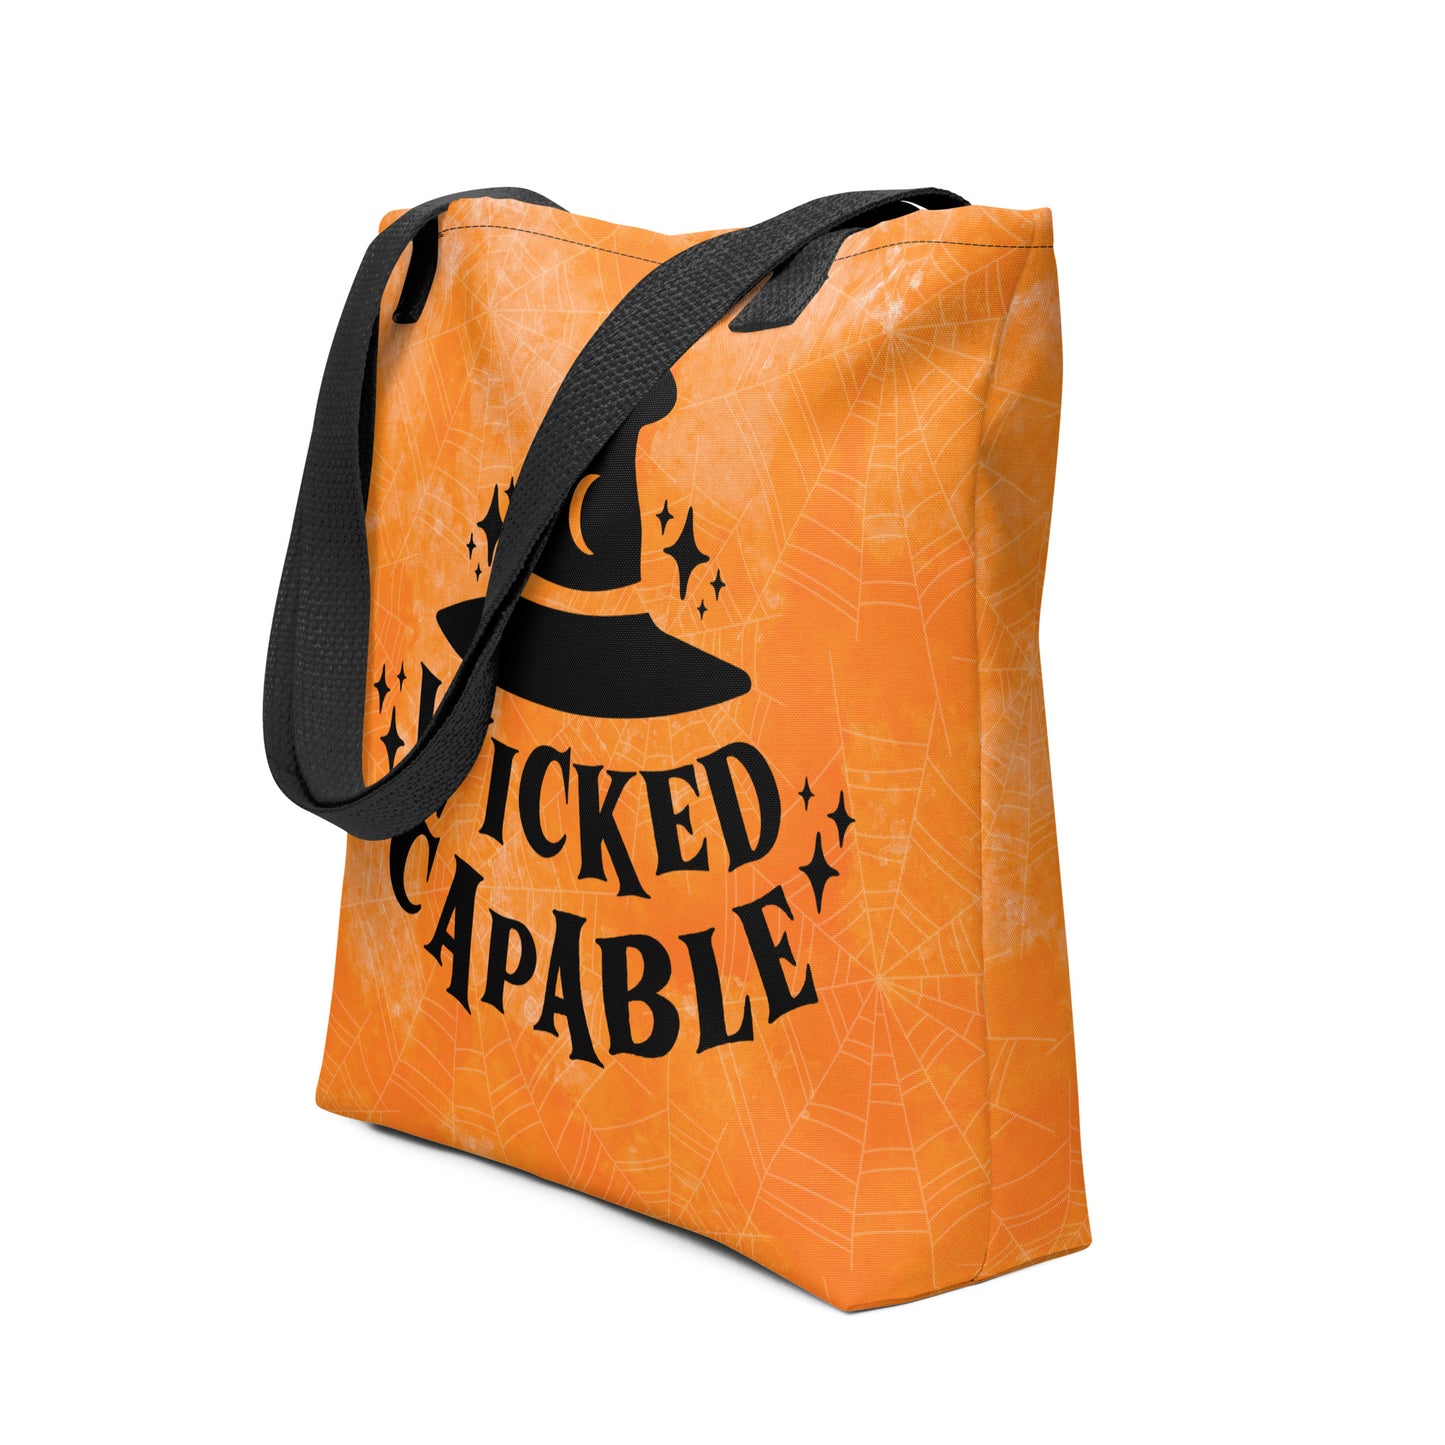 Wicked Capable | Halloween Treat Bag | Orange